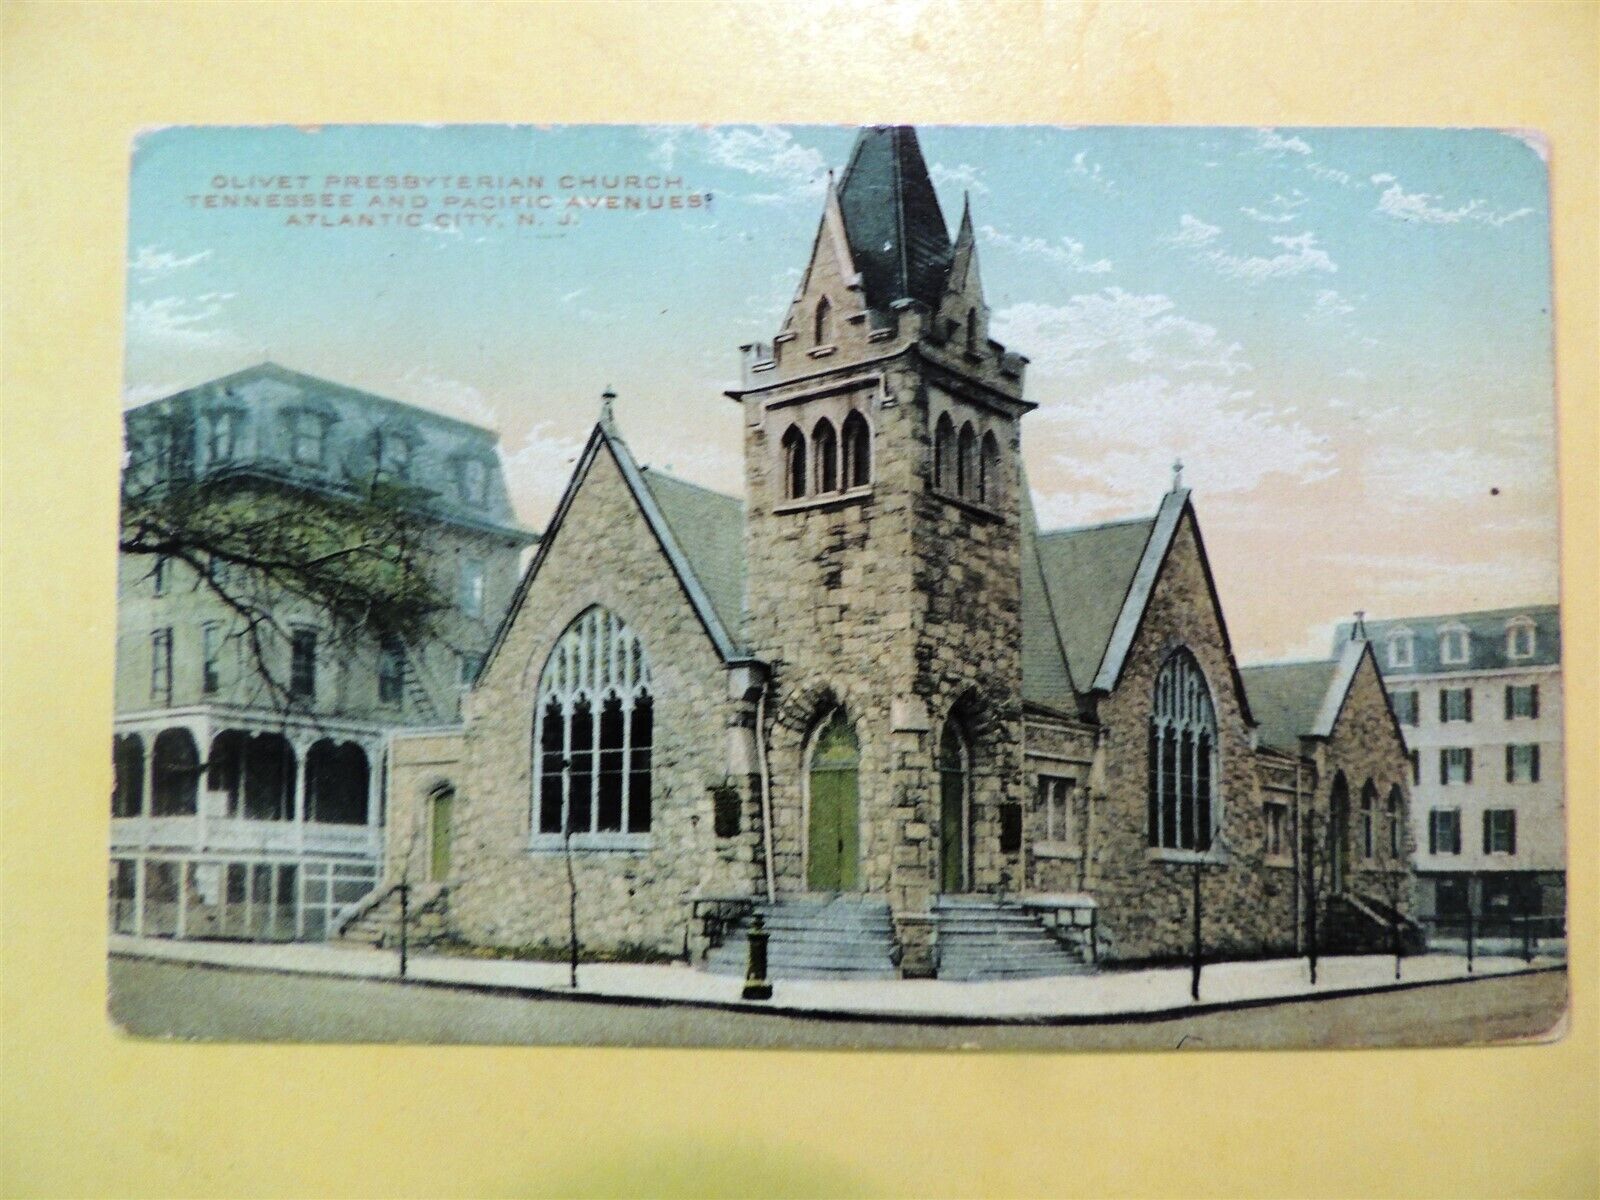 Olivet Presbyterian Church Atlantic City New Jersey vintage postcard